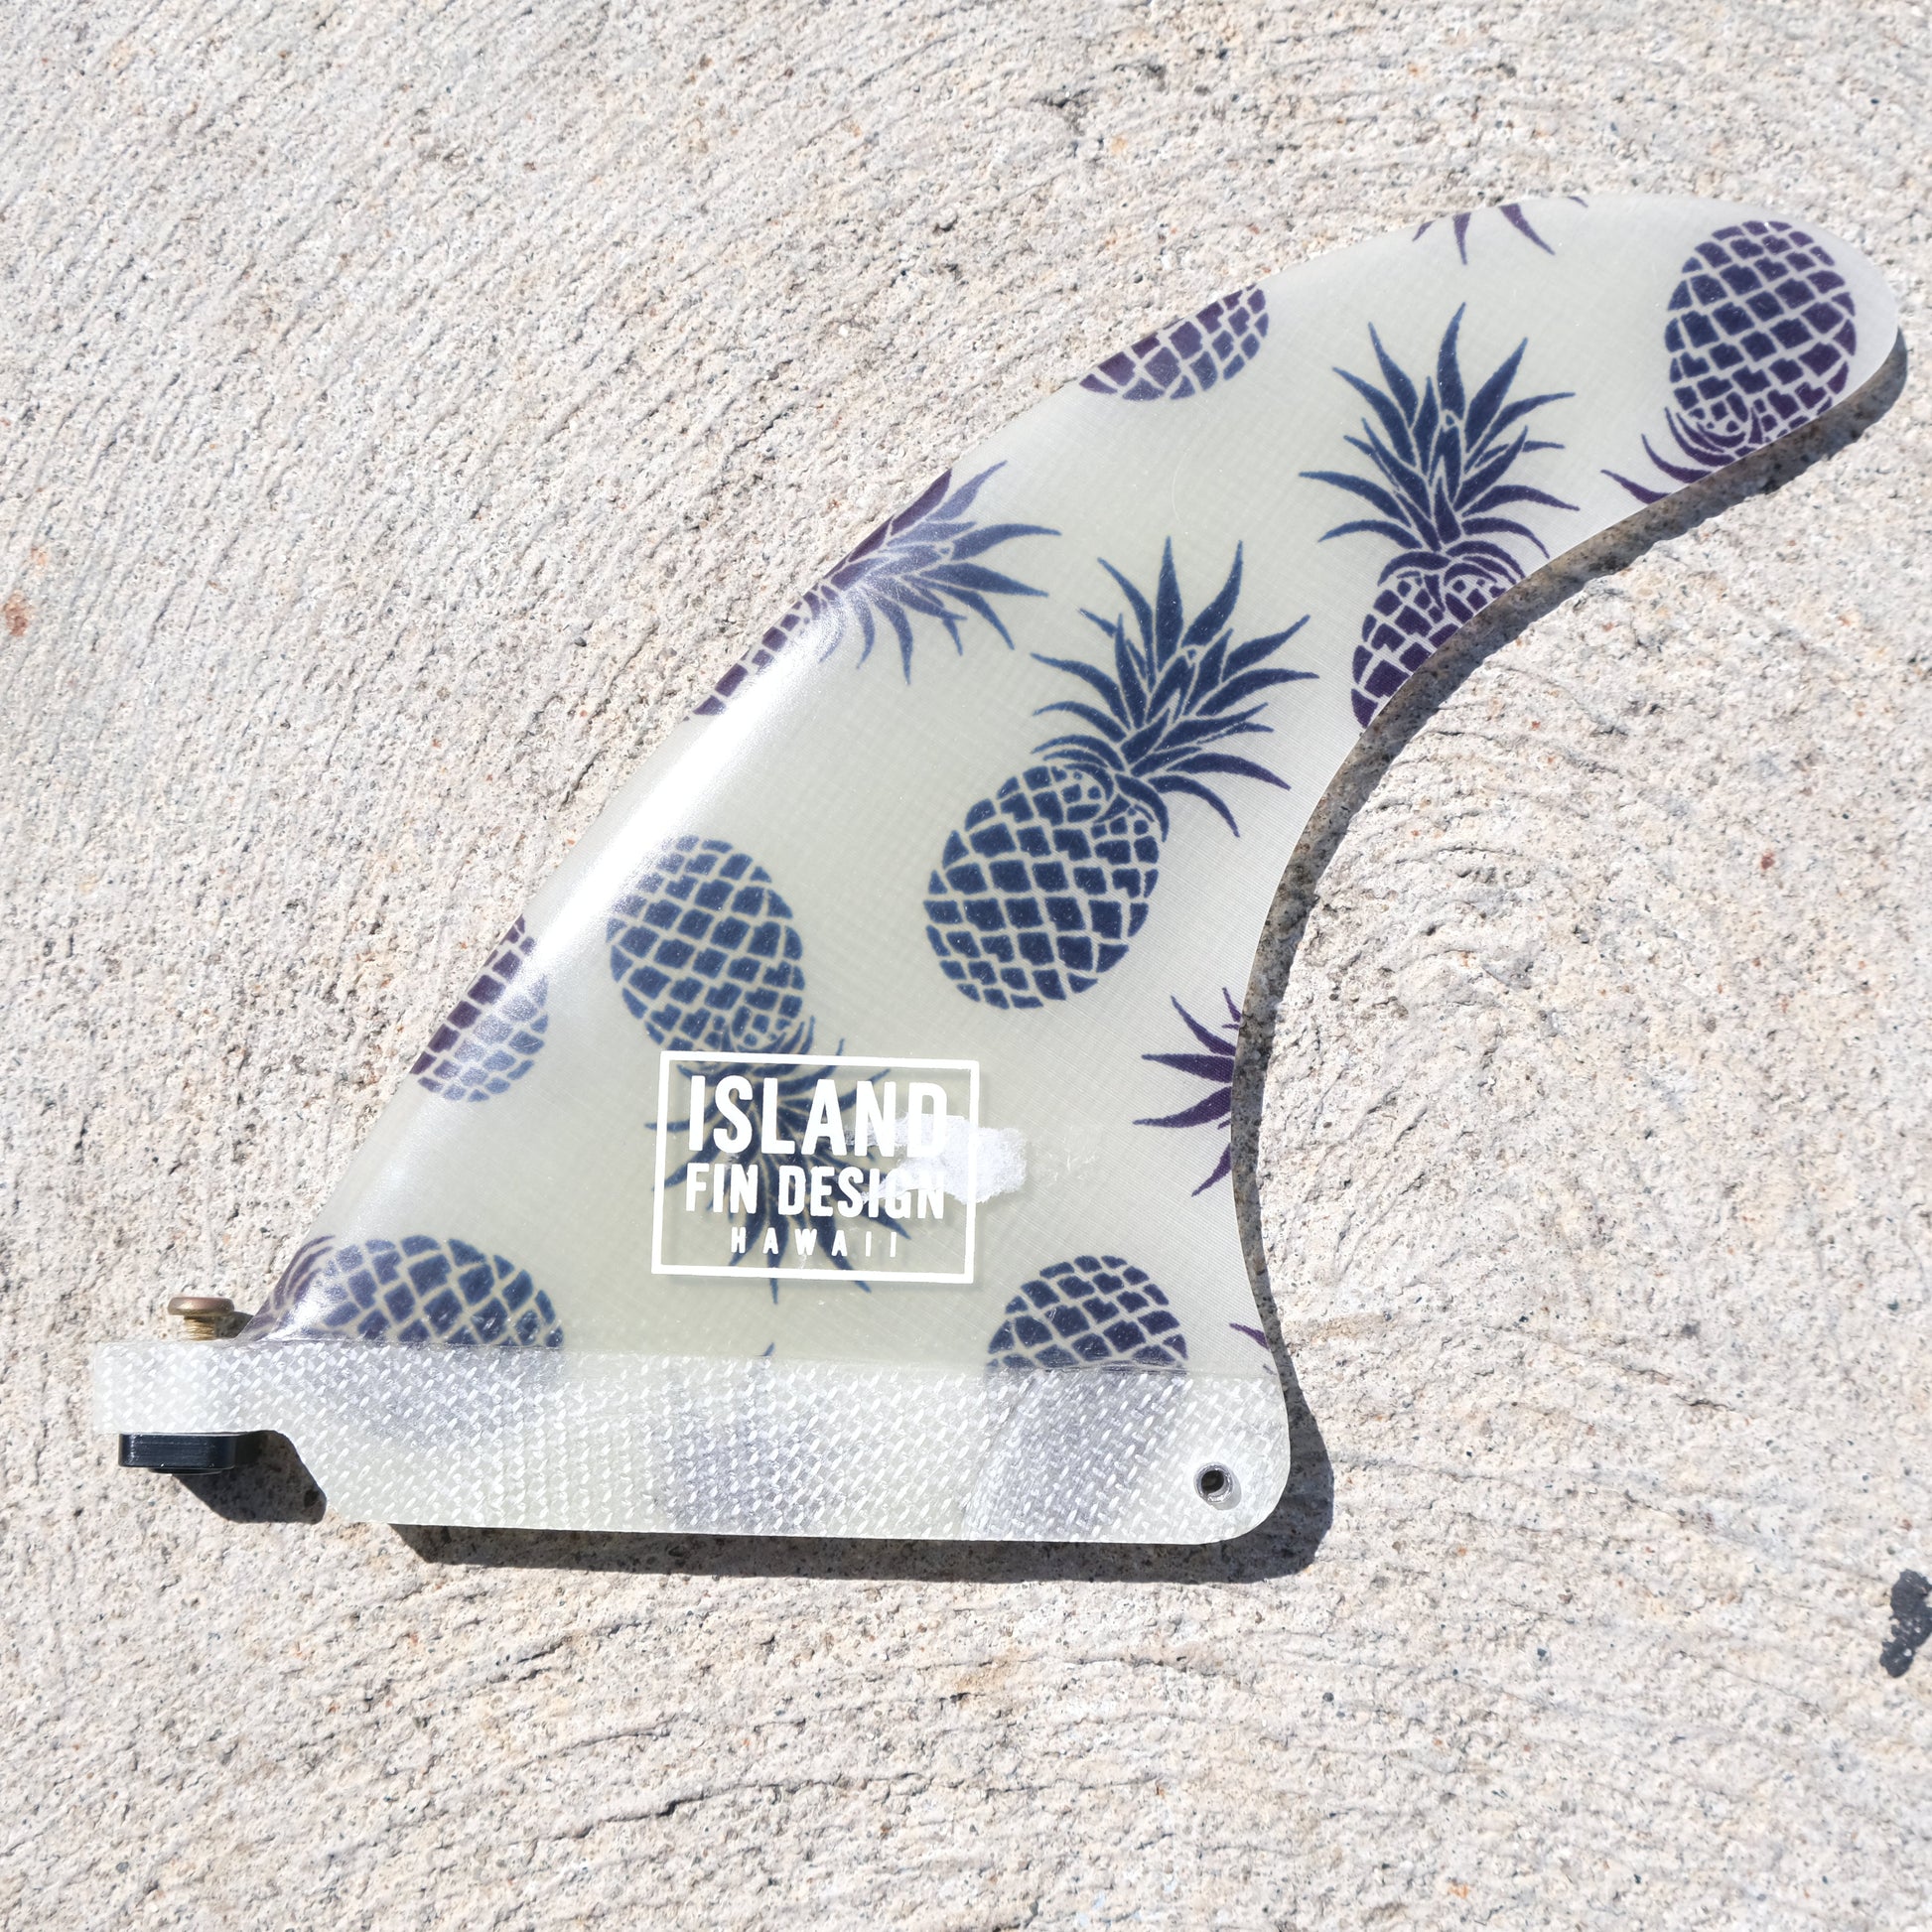 Island Fin Design Islander Pineapple Single Fin 5.5" - Soul Performance Surf & Skate - Island Fin Design